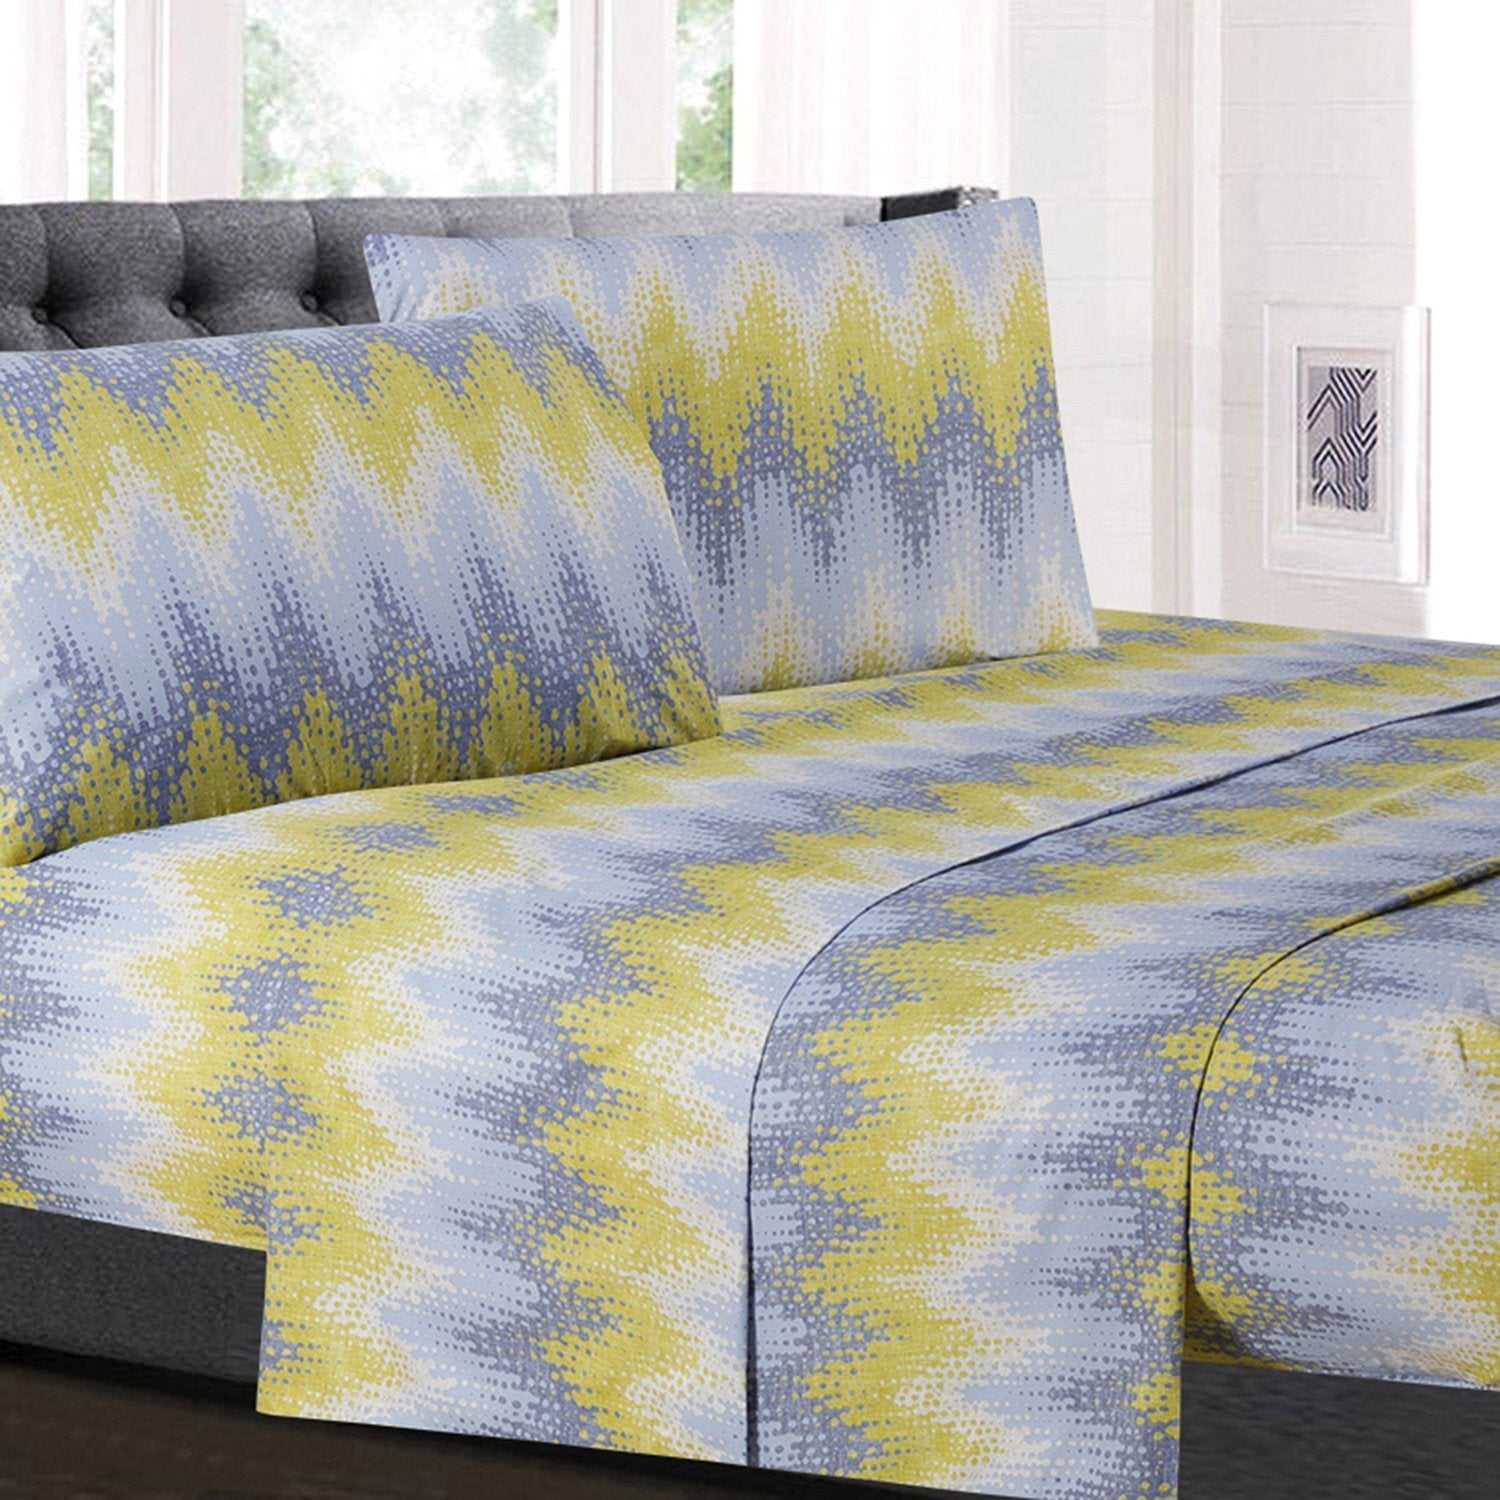 Classic 4-Piece Bed Sheet Set (Malibu Chevron) - Bed